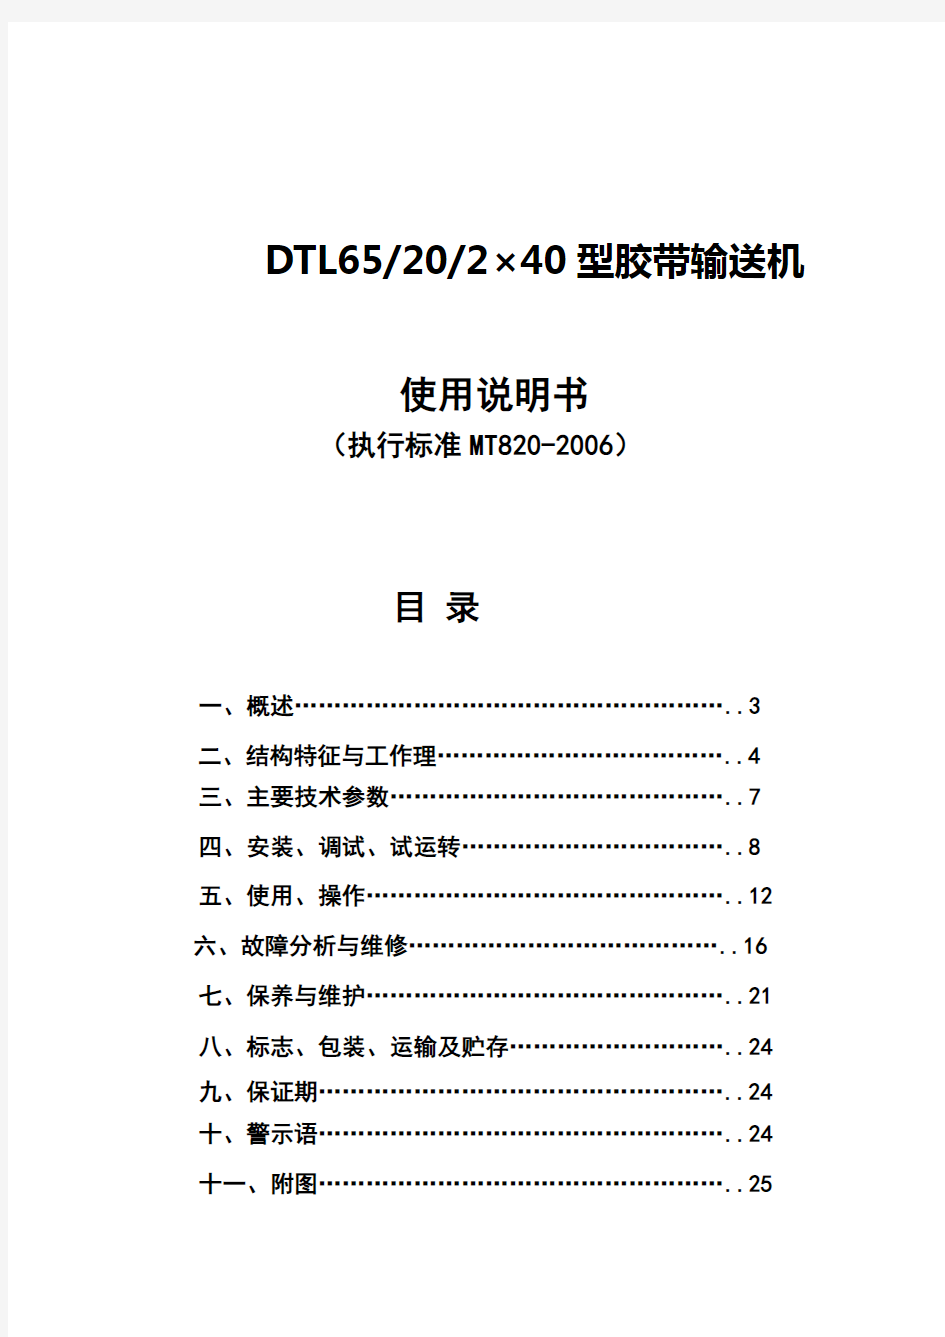 DTL65-20-2×40带式输送机使用说明书